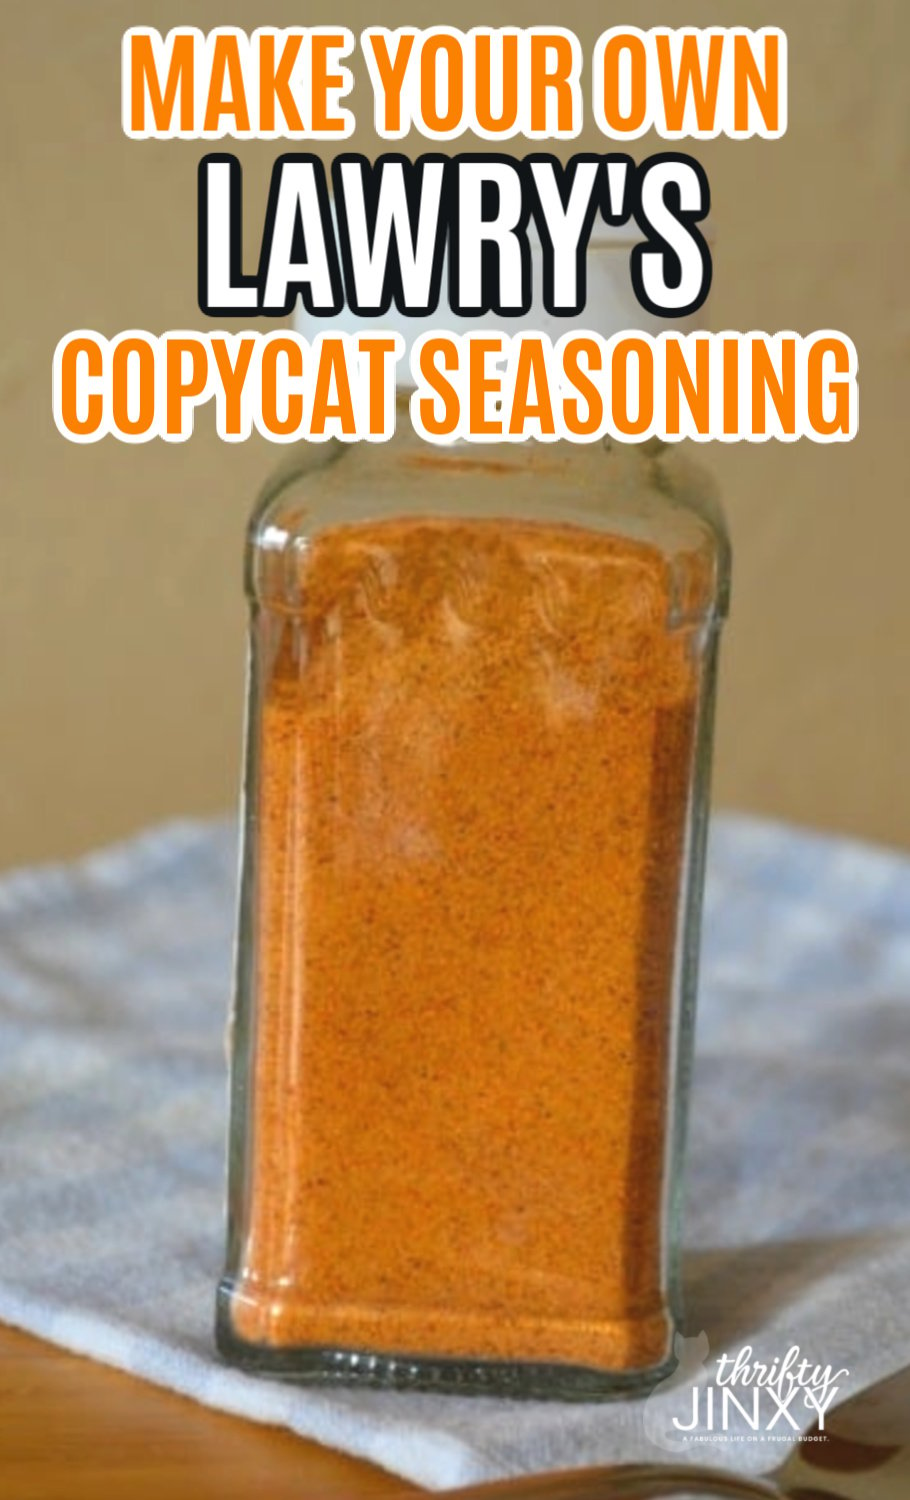 https://thriftyjinxy.com/wp-content/uploads/2014/03/Lawrys-Copycat-Seasoning.jpg